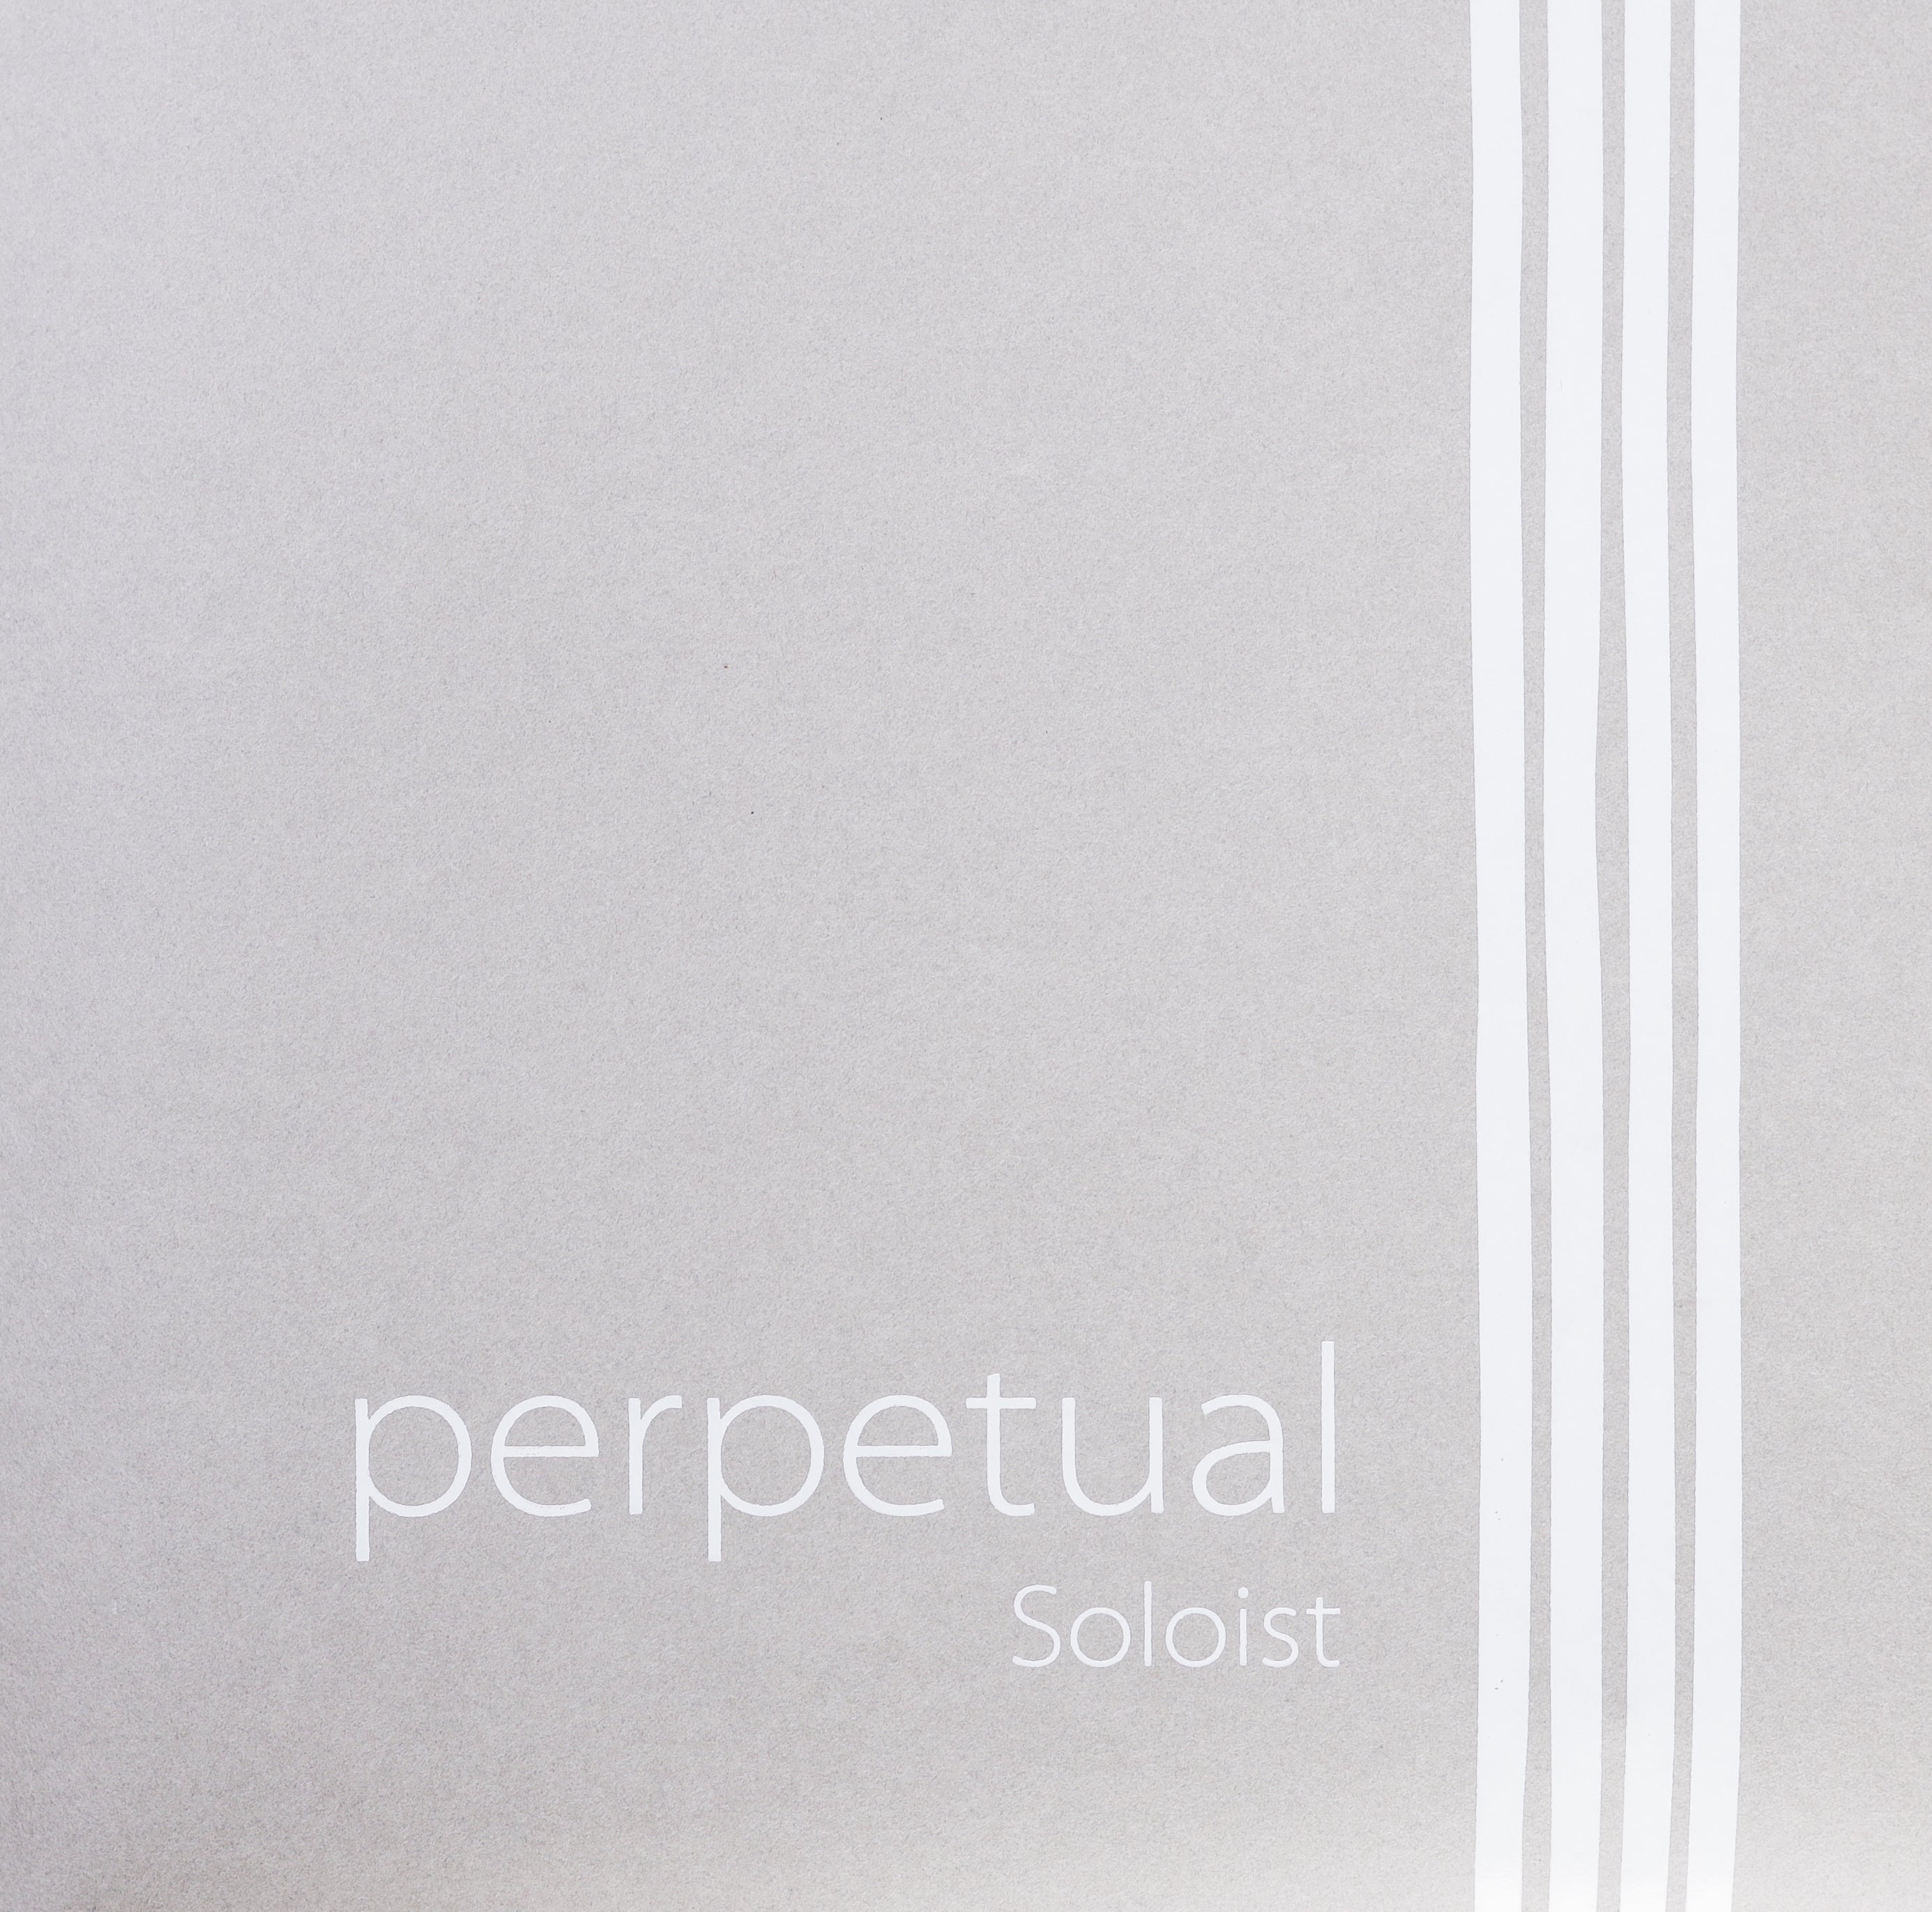 Pirastro Perpetual Soloist Cello Set (post-trial return)